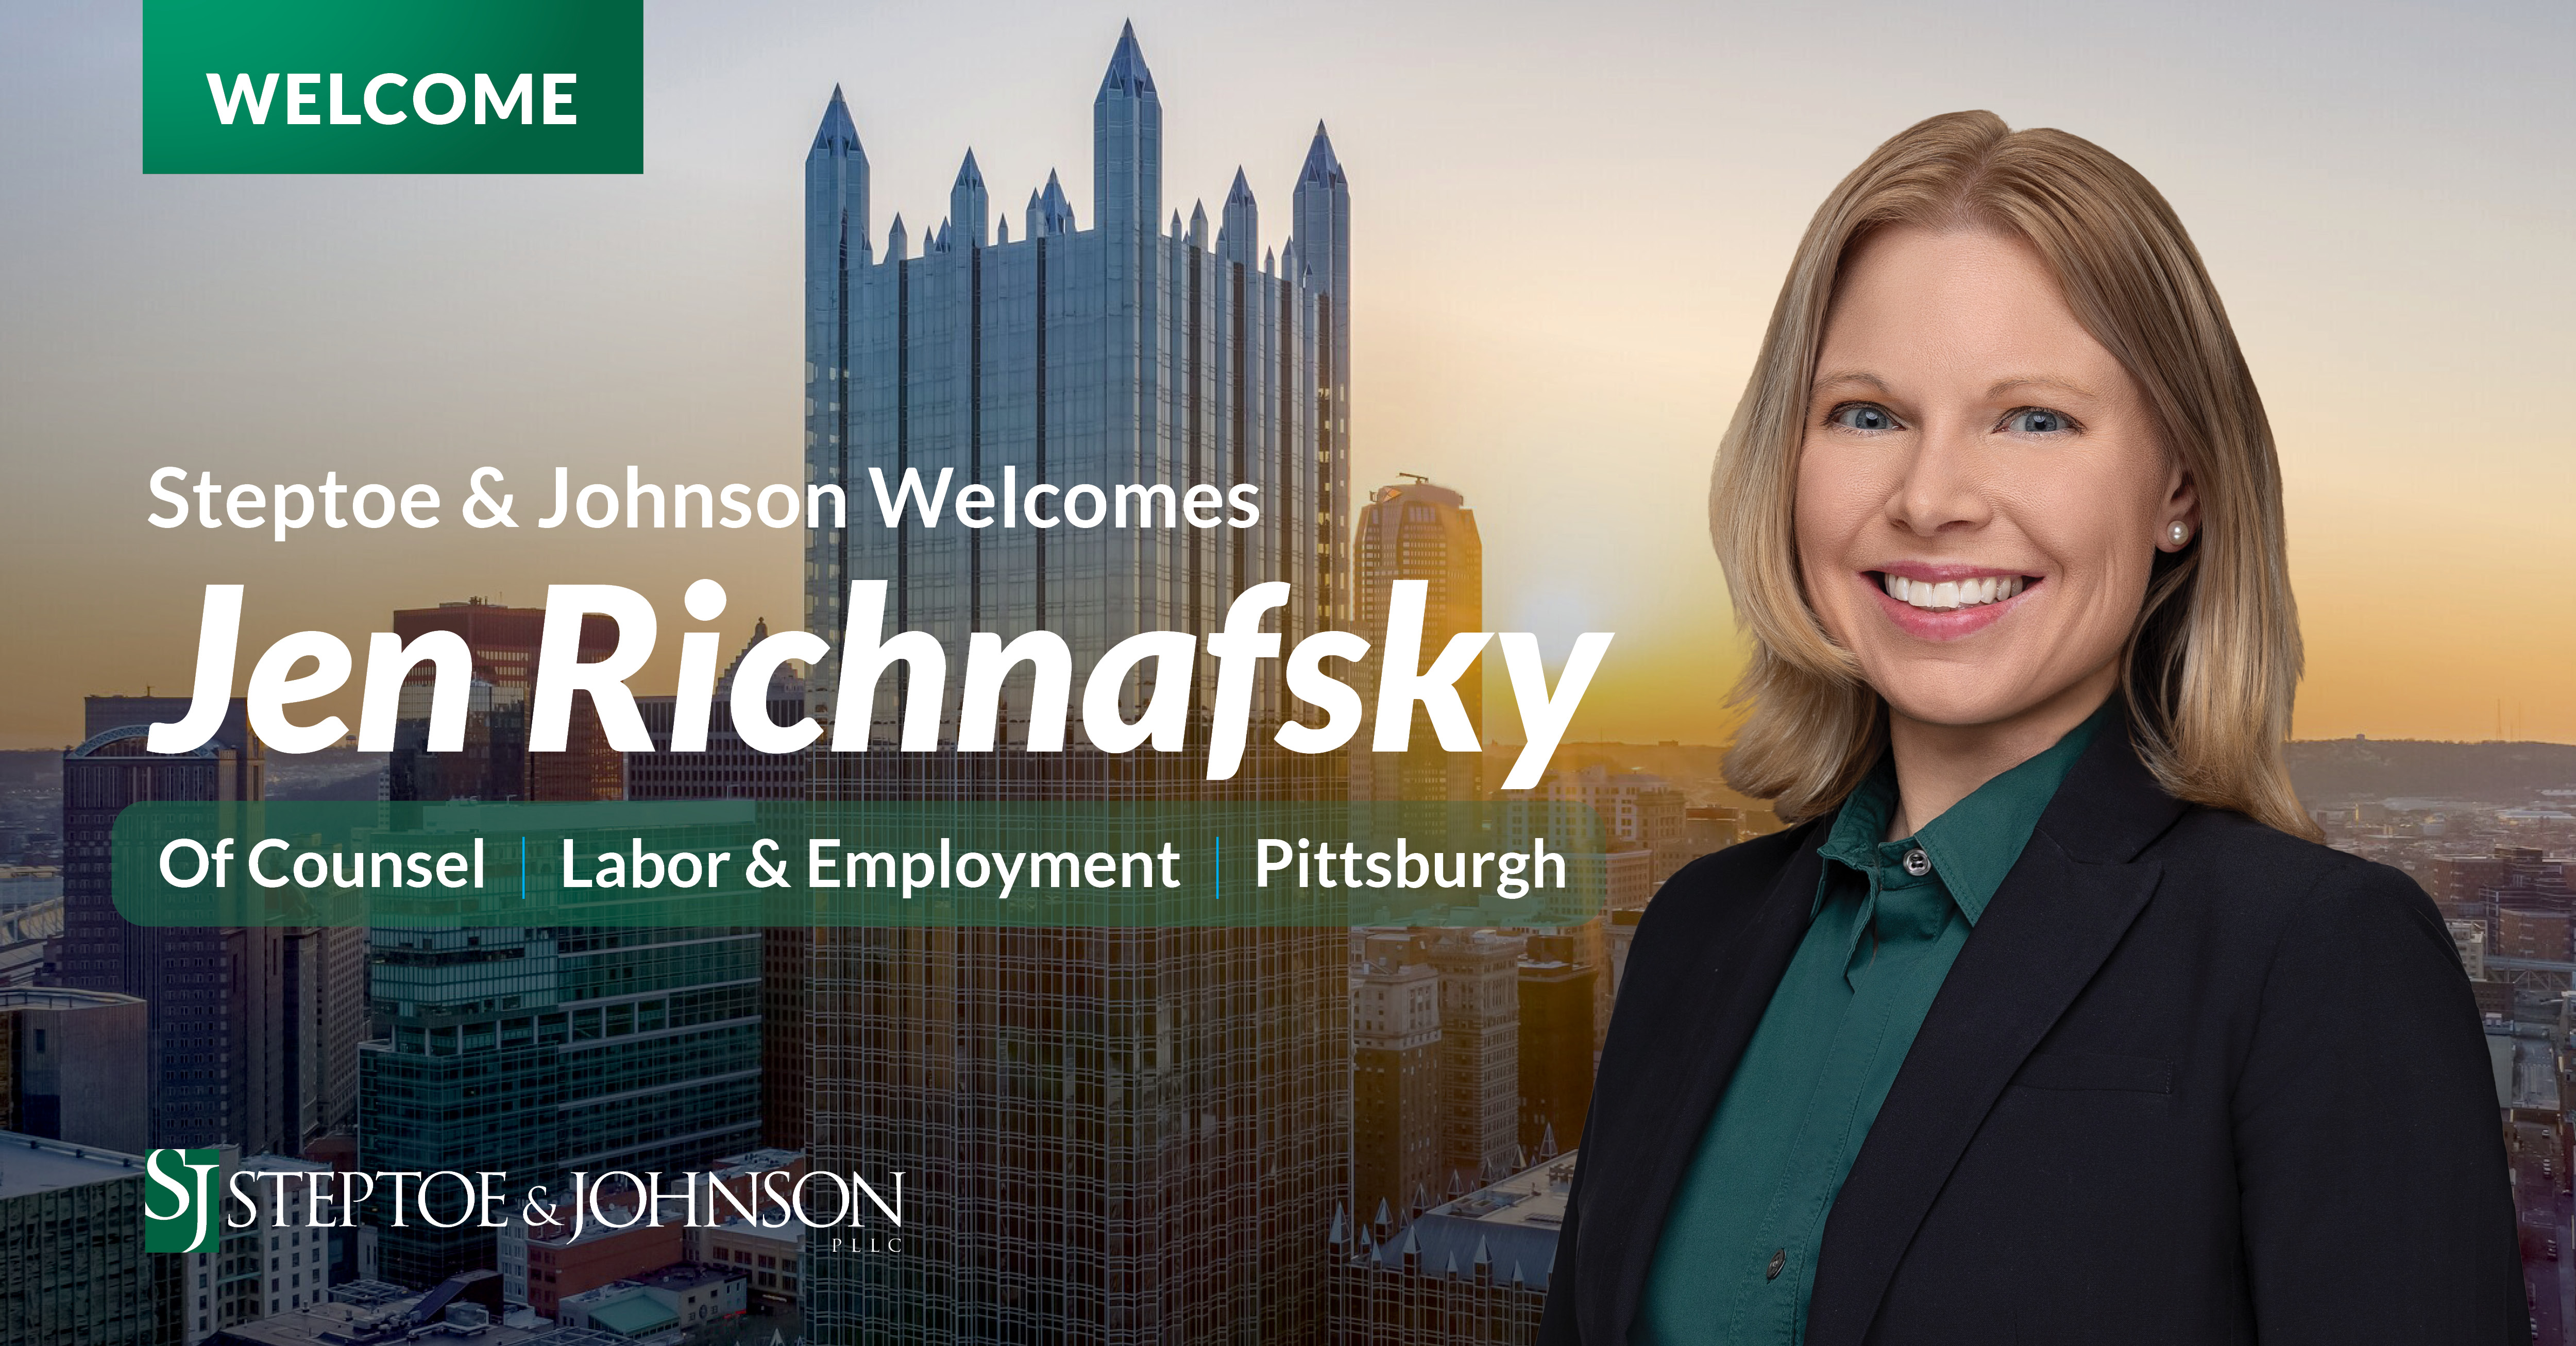 Jennifer P. Richnafsky Joins Steptoe & Johnson’s Labor & Employment Team